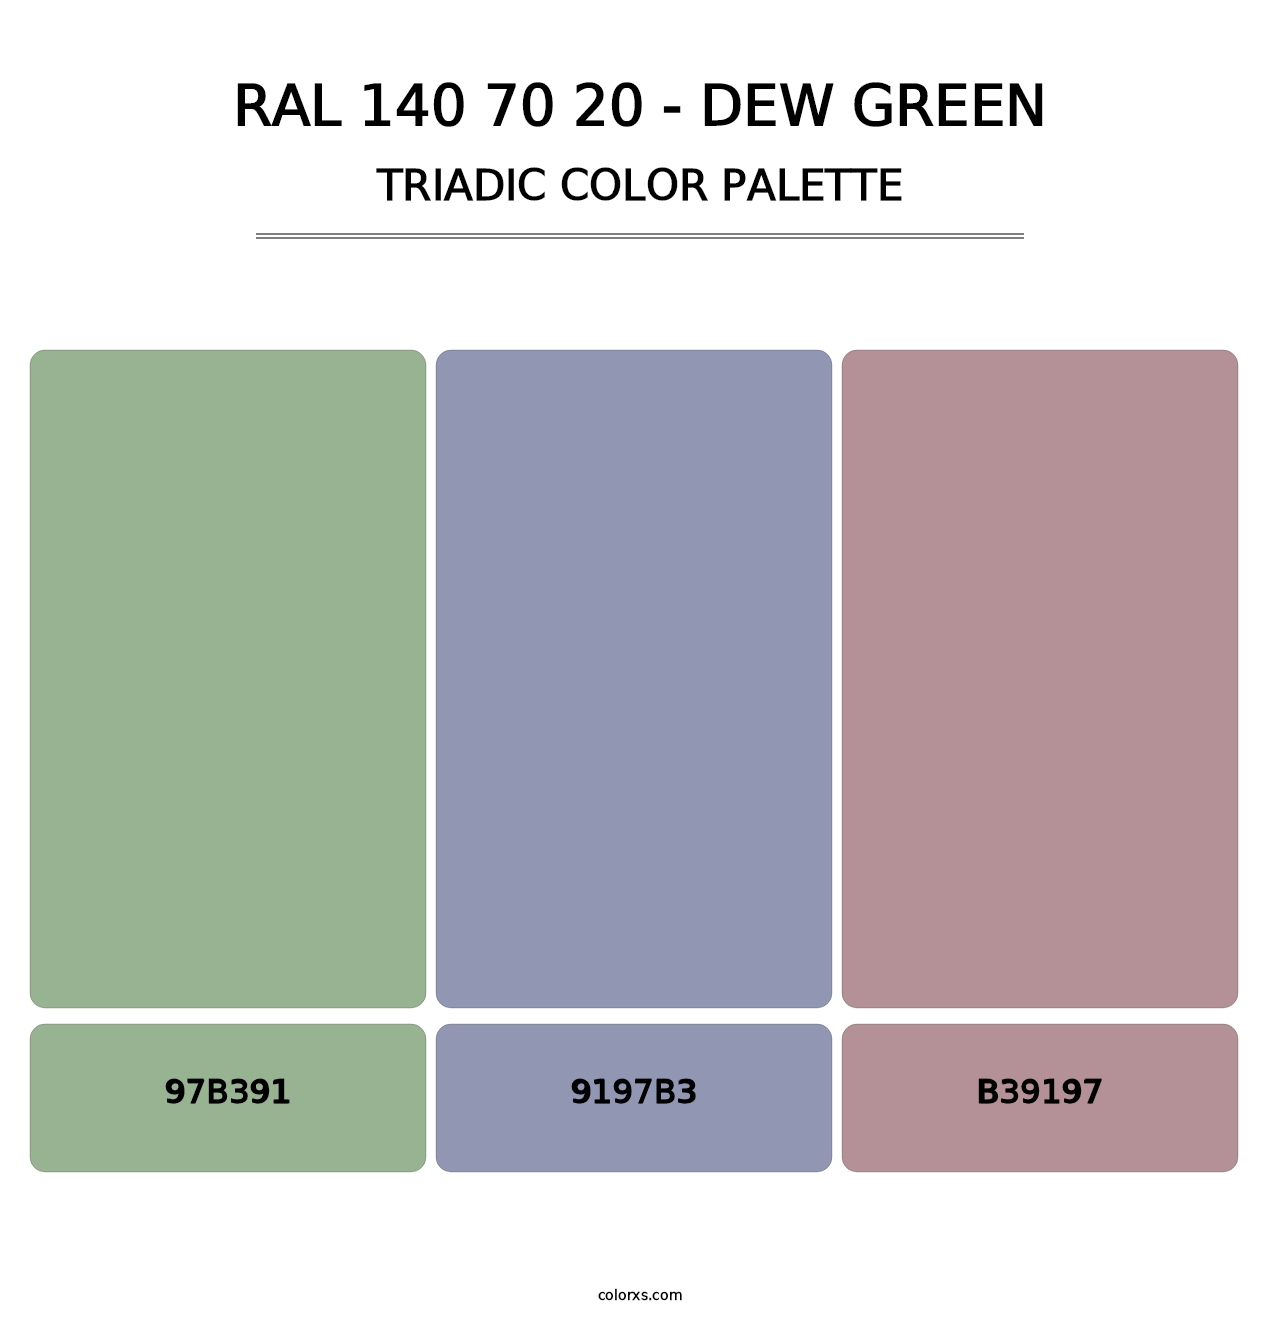 RAL 140 70 20 - Dew Green - Triadic Color Palette